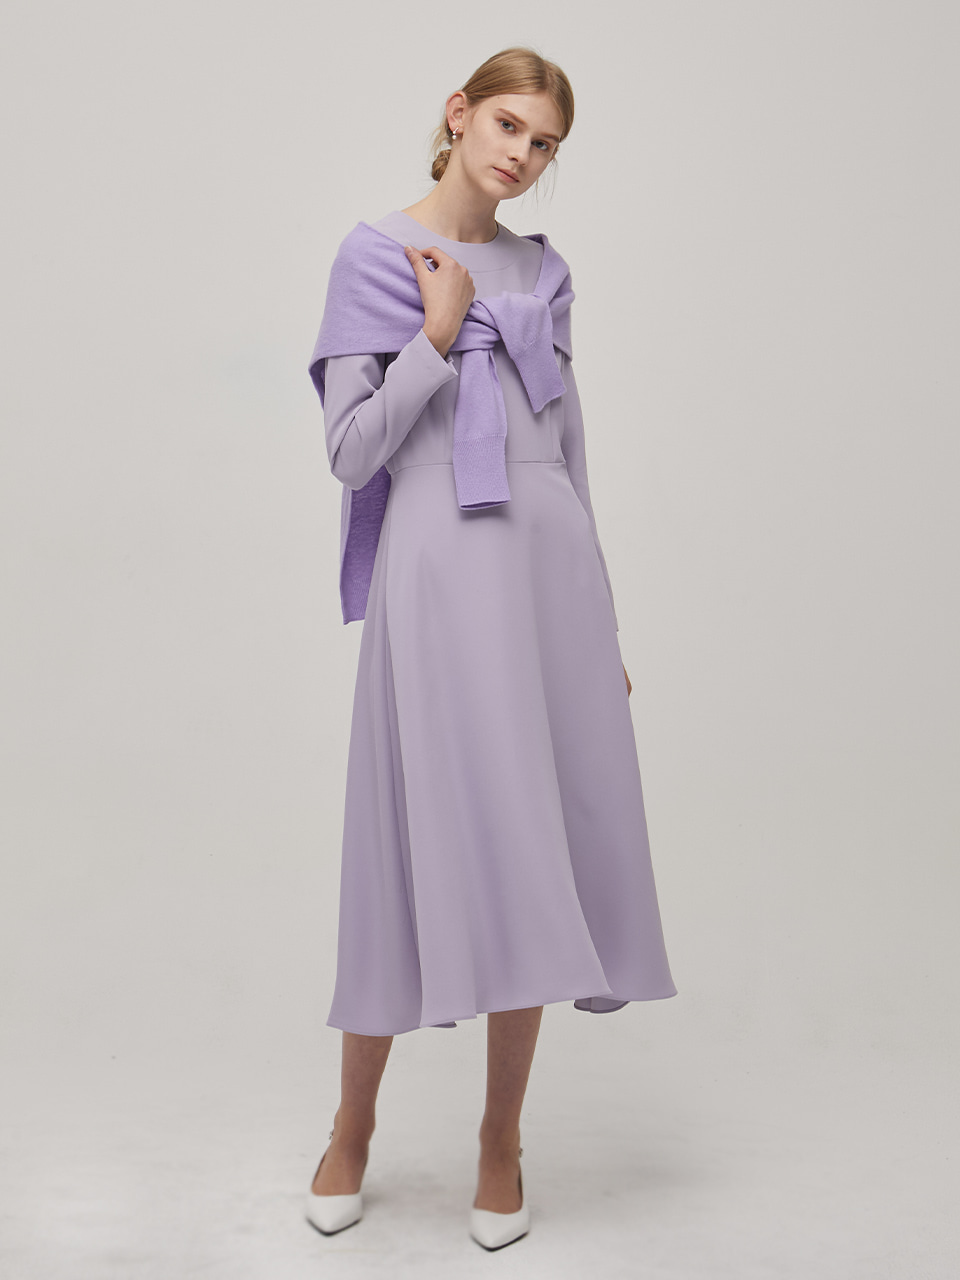 Long Sleeve Flare Dress - Lavender